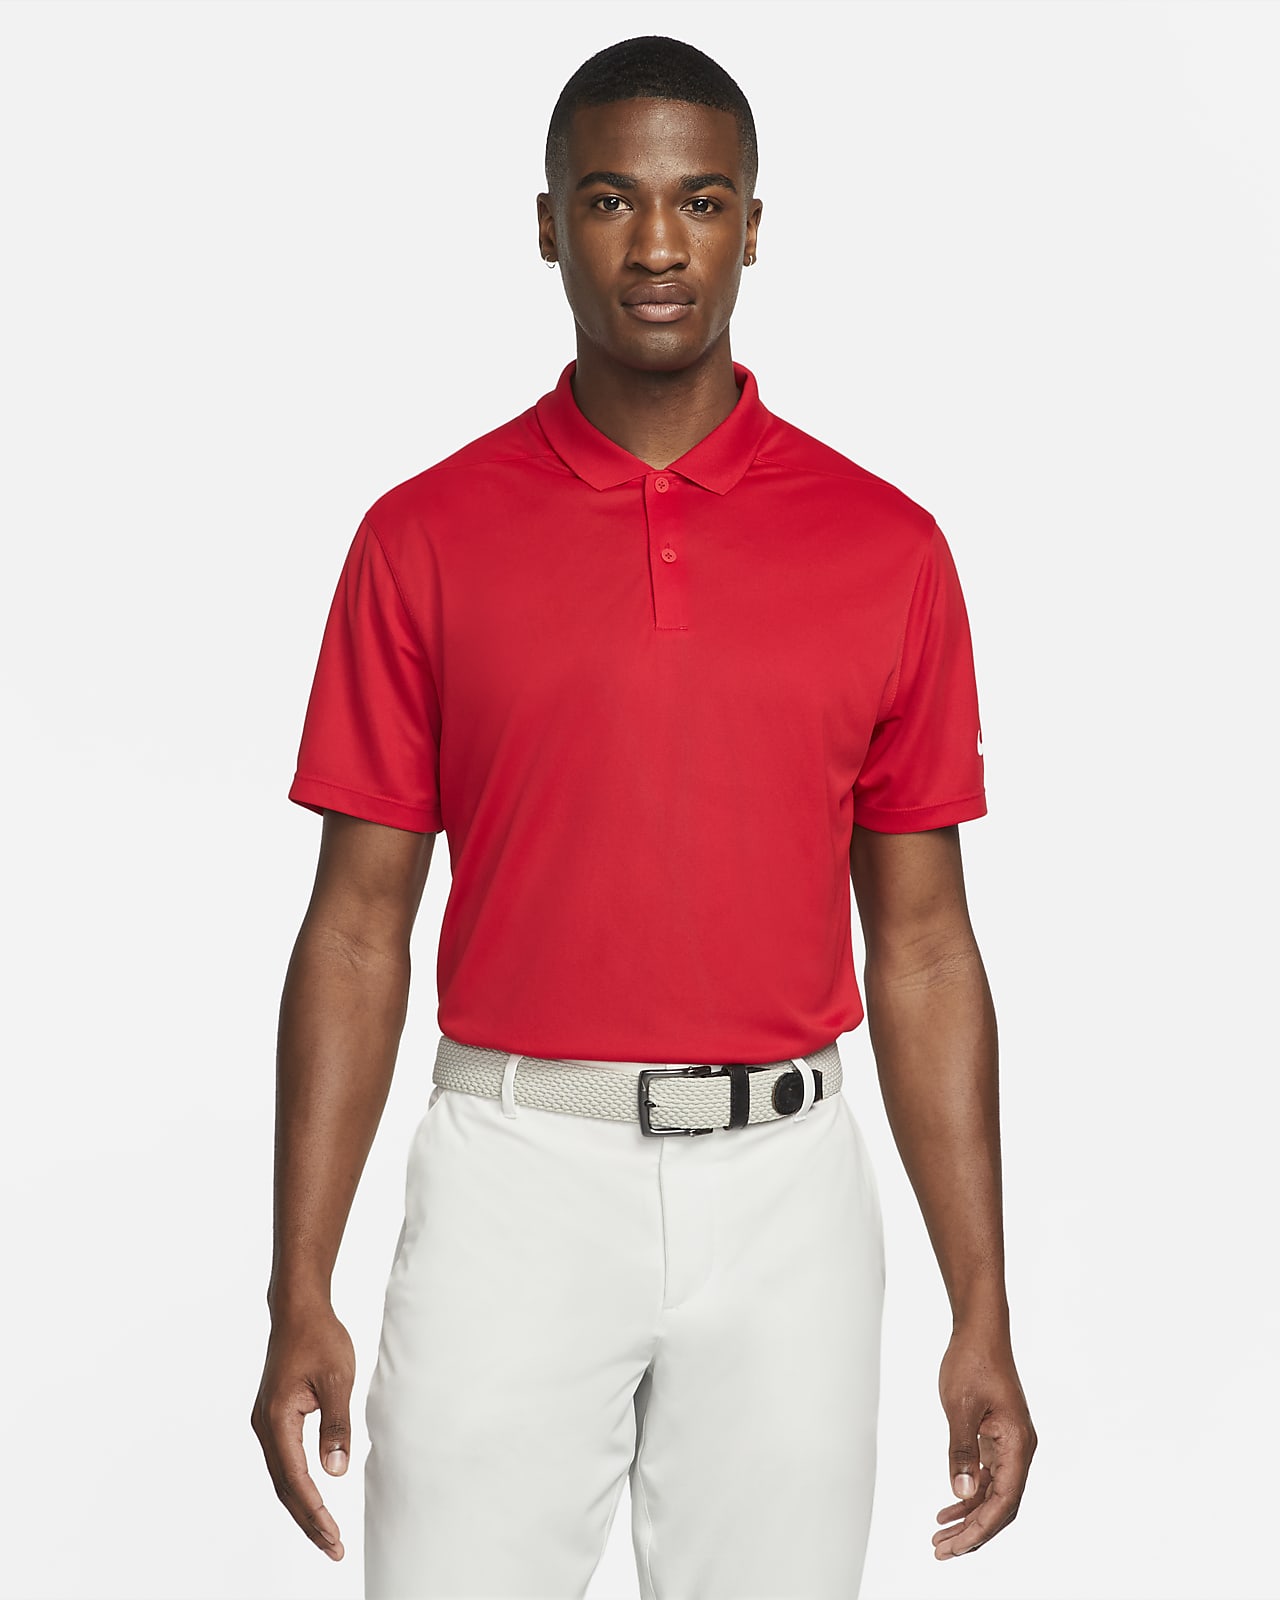 Men's Golf Polos - Dri-Mesh Moisture Wicking Golf Shirts in